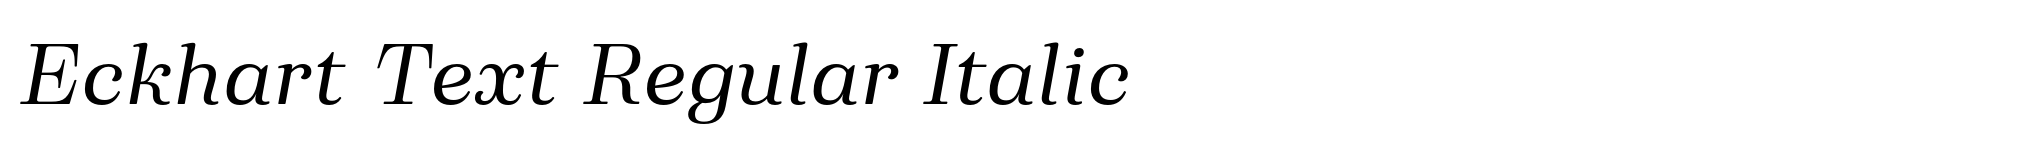 Eckhart Text Regular Italic image